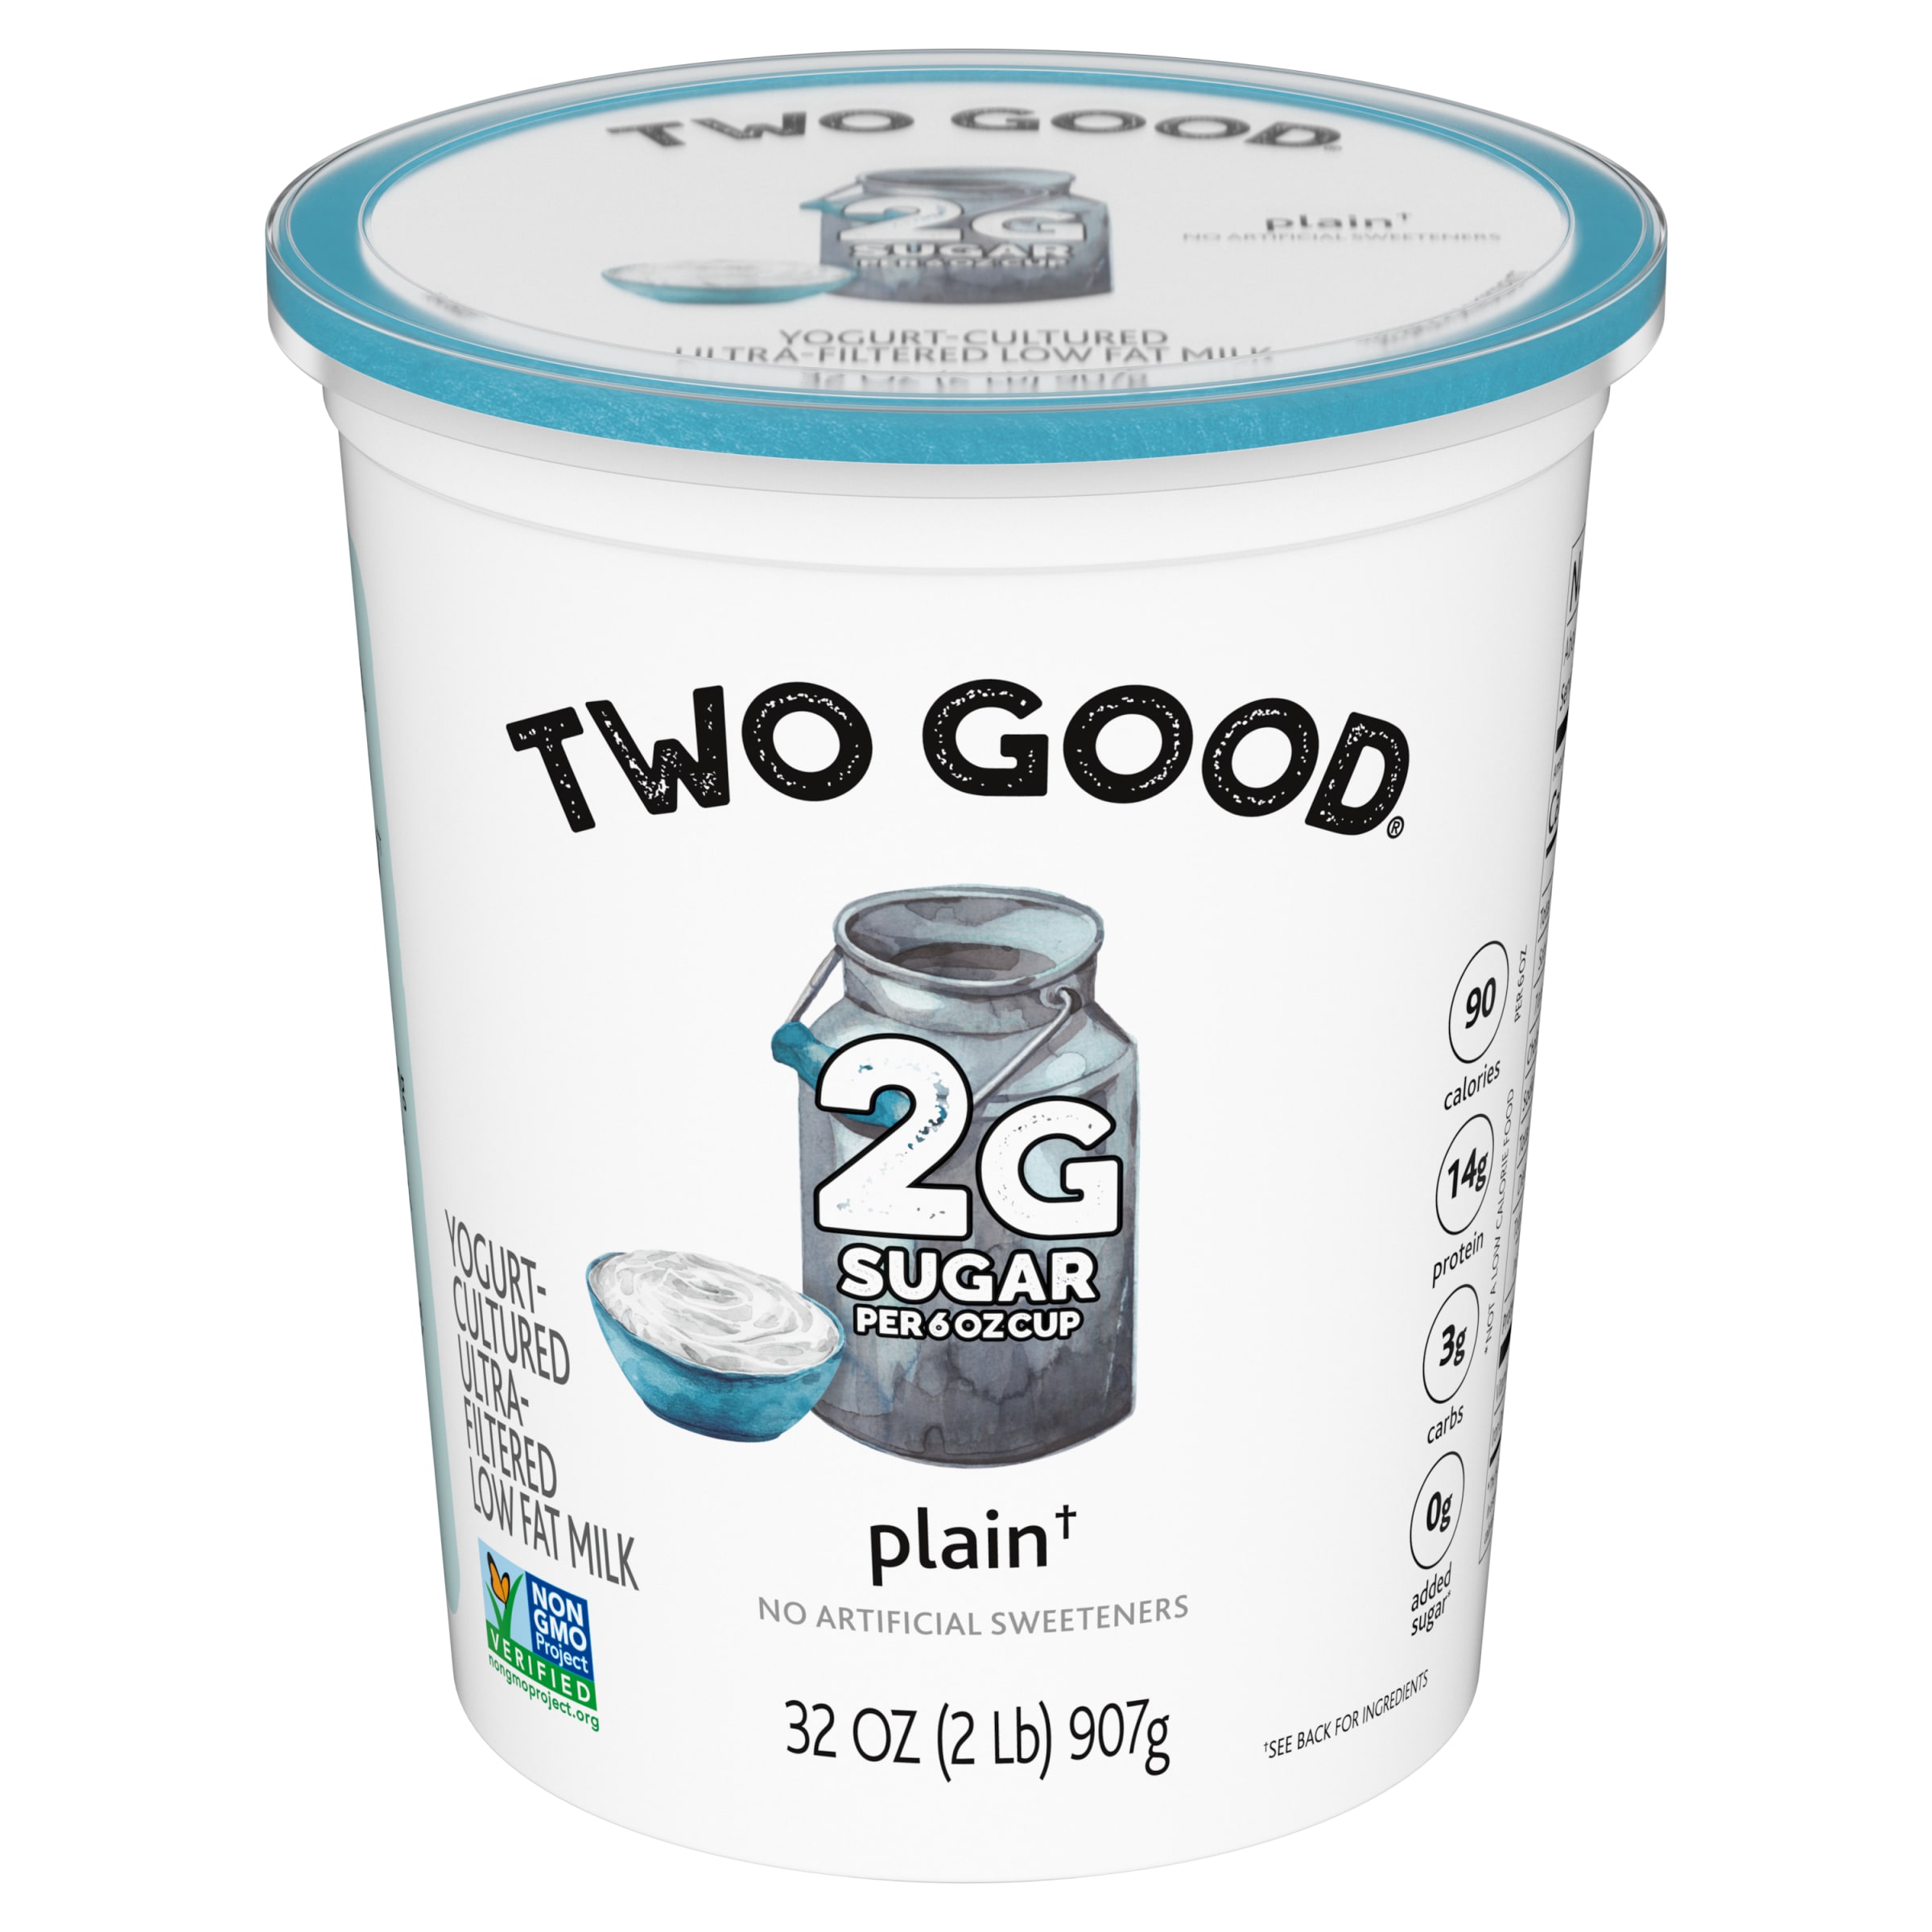 Two Good Lower Sugar Plain Flavored Low Fat Greek Yogurt Cultured Product, 32 oz Tub - image 1 of 10